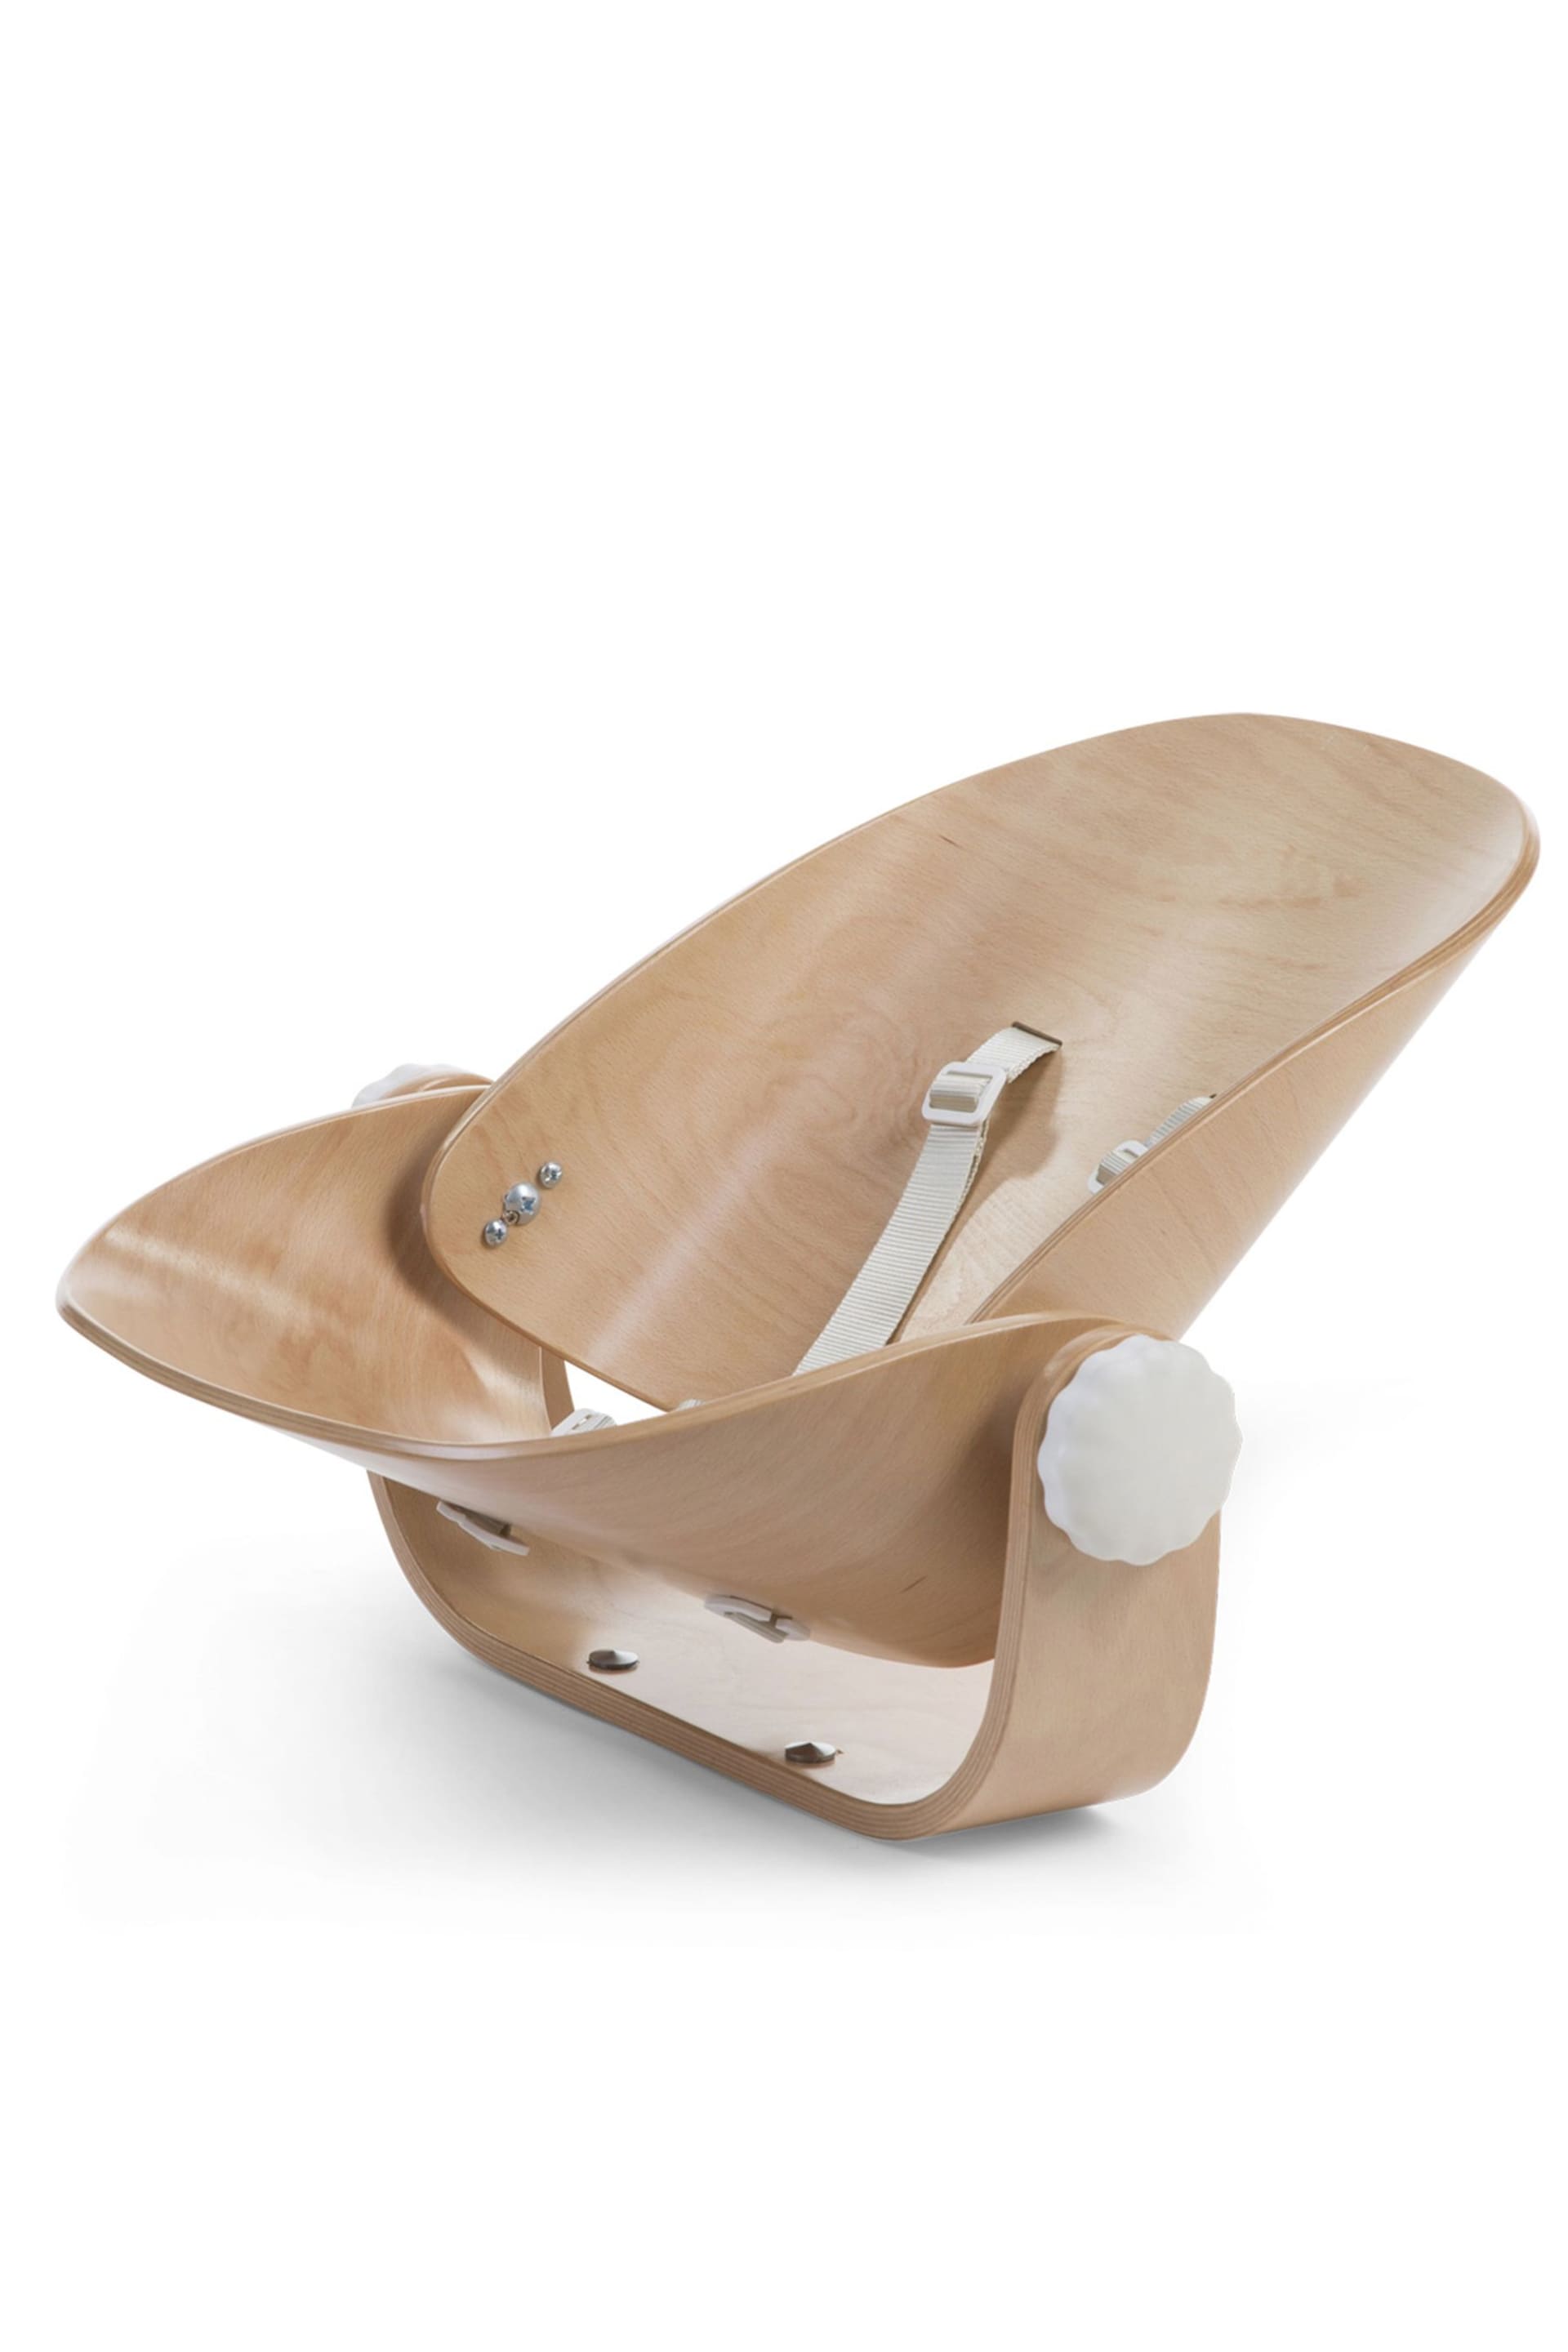 White Childhome Evolu Newborn Seat - Image 3 of 6